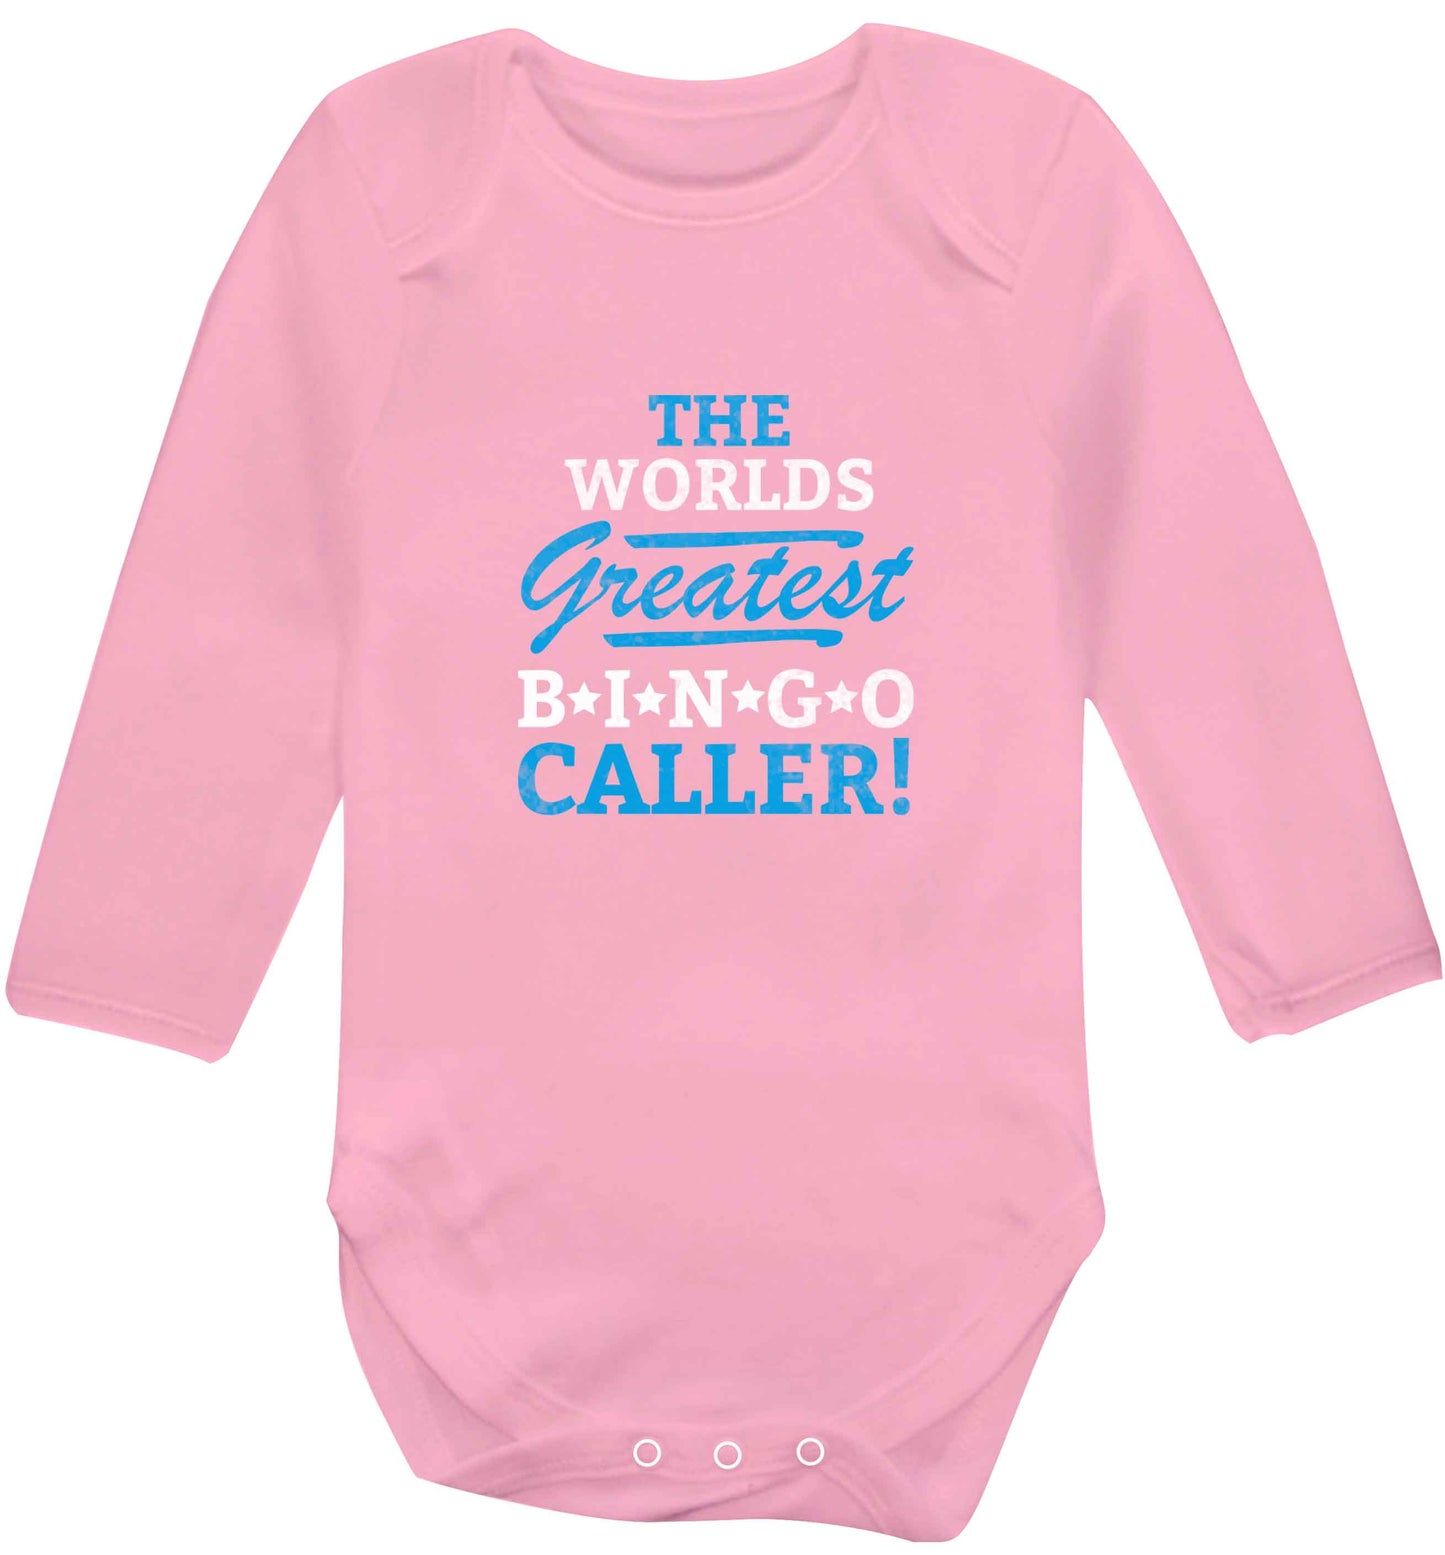 Worlds greatest bingo caller baby vest long sleeved pale pink 6-12 months